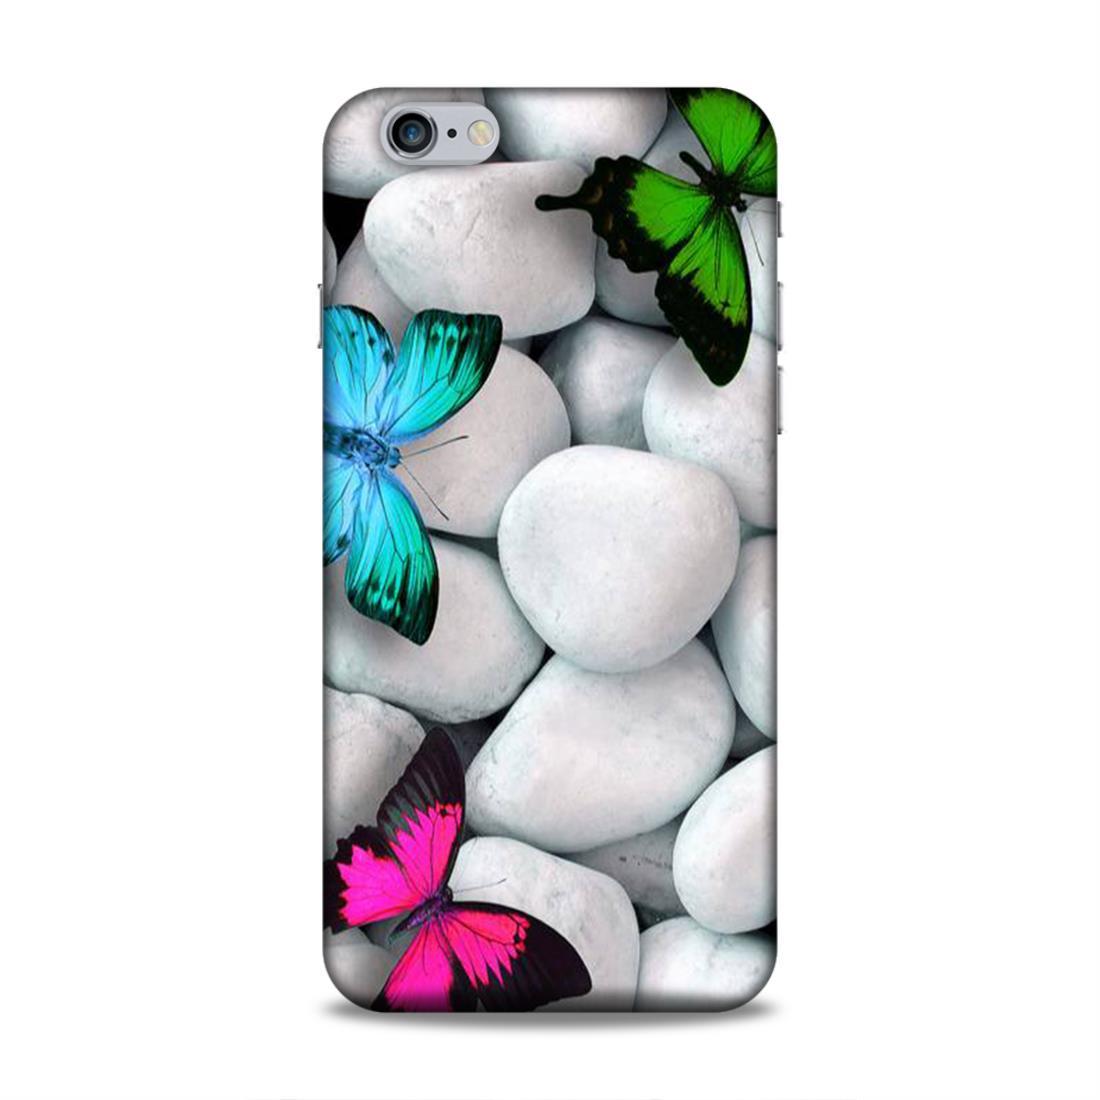 White Stone iPhone 6 Plus Phone Case Cover